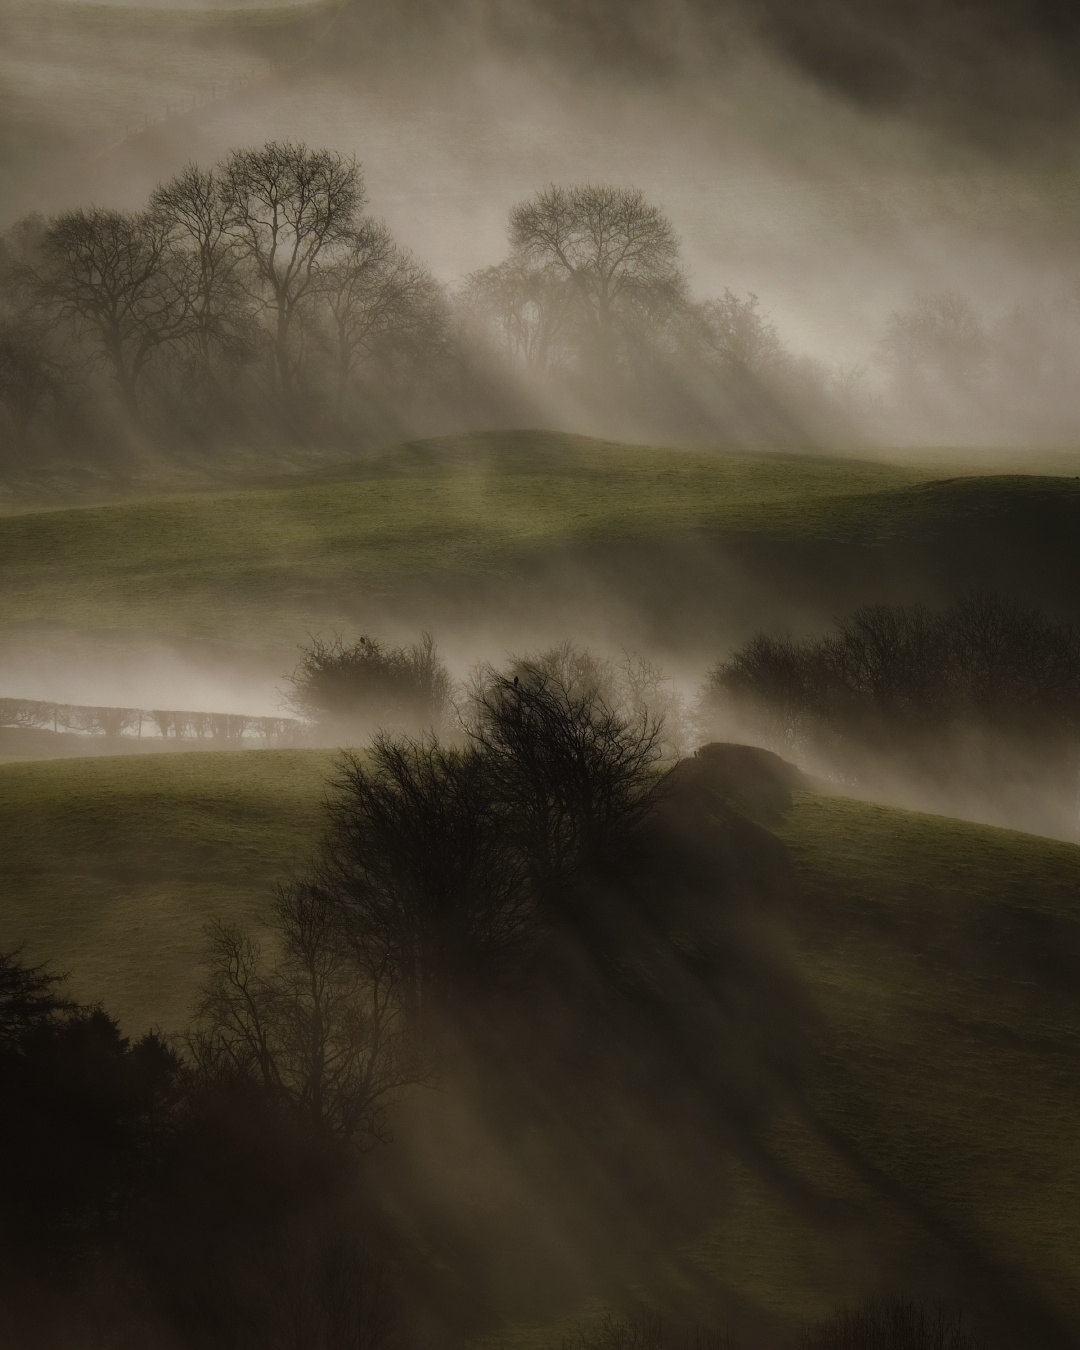 ...туманная ритмичность... ireland nature outdoors countryside landscape fog mist hazy mood moody rhythm morning dawn from above aerial rural trees light shades shadows europe picturesque awe